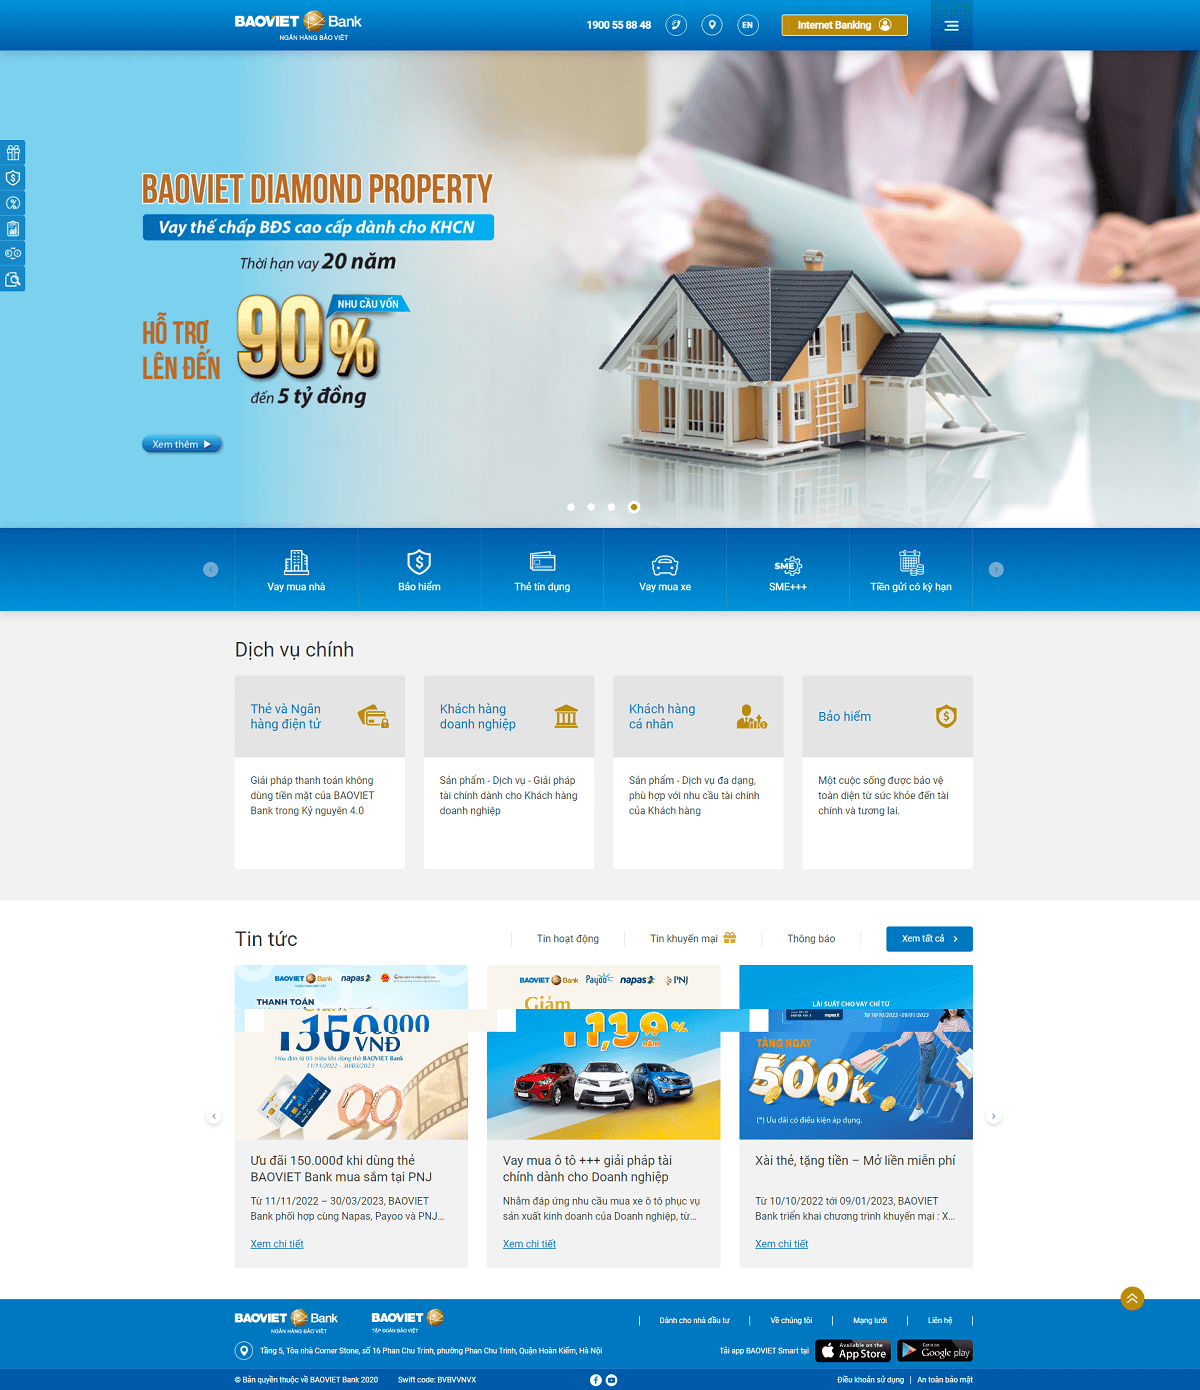 Thiết kế trang chủ website Baovietbank (Do Sao Kim thiết kế)